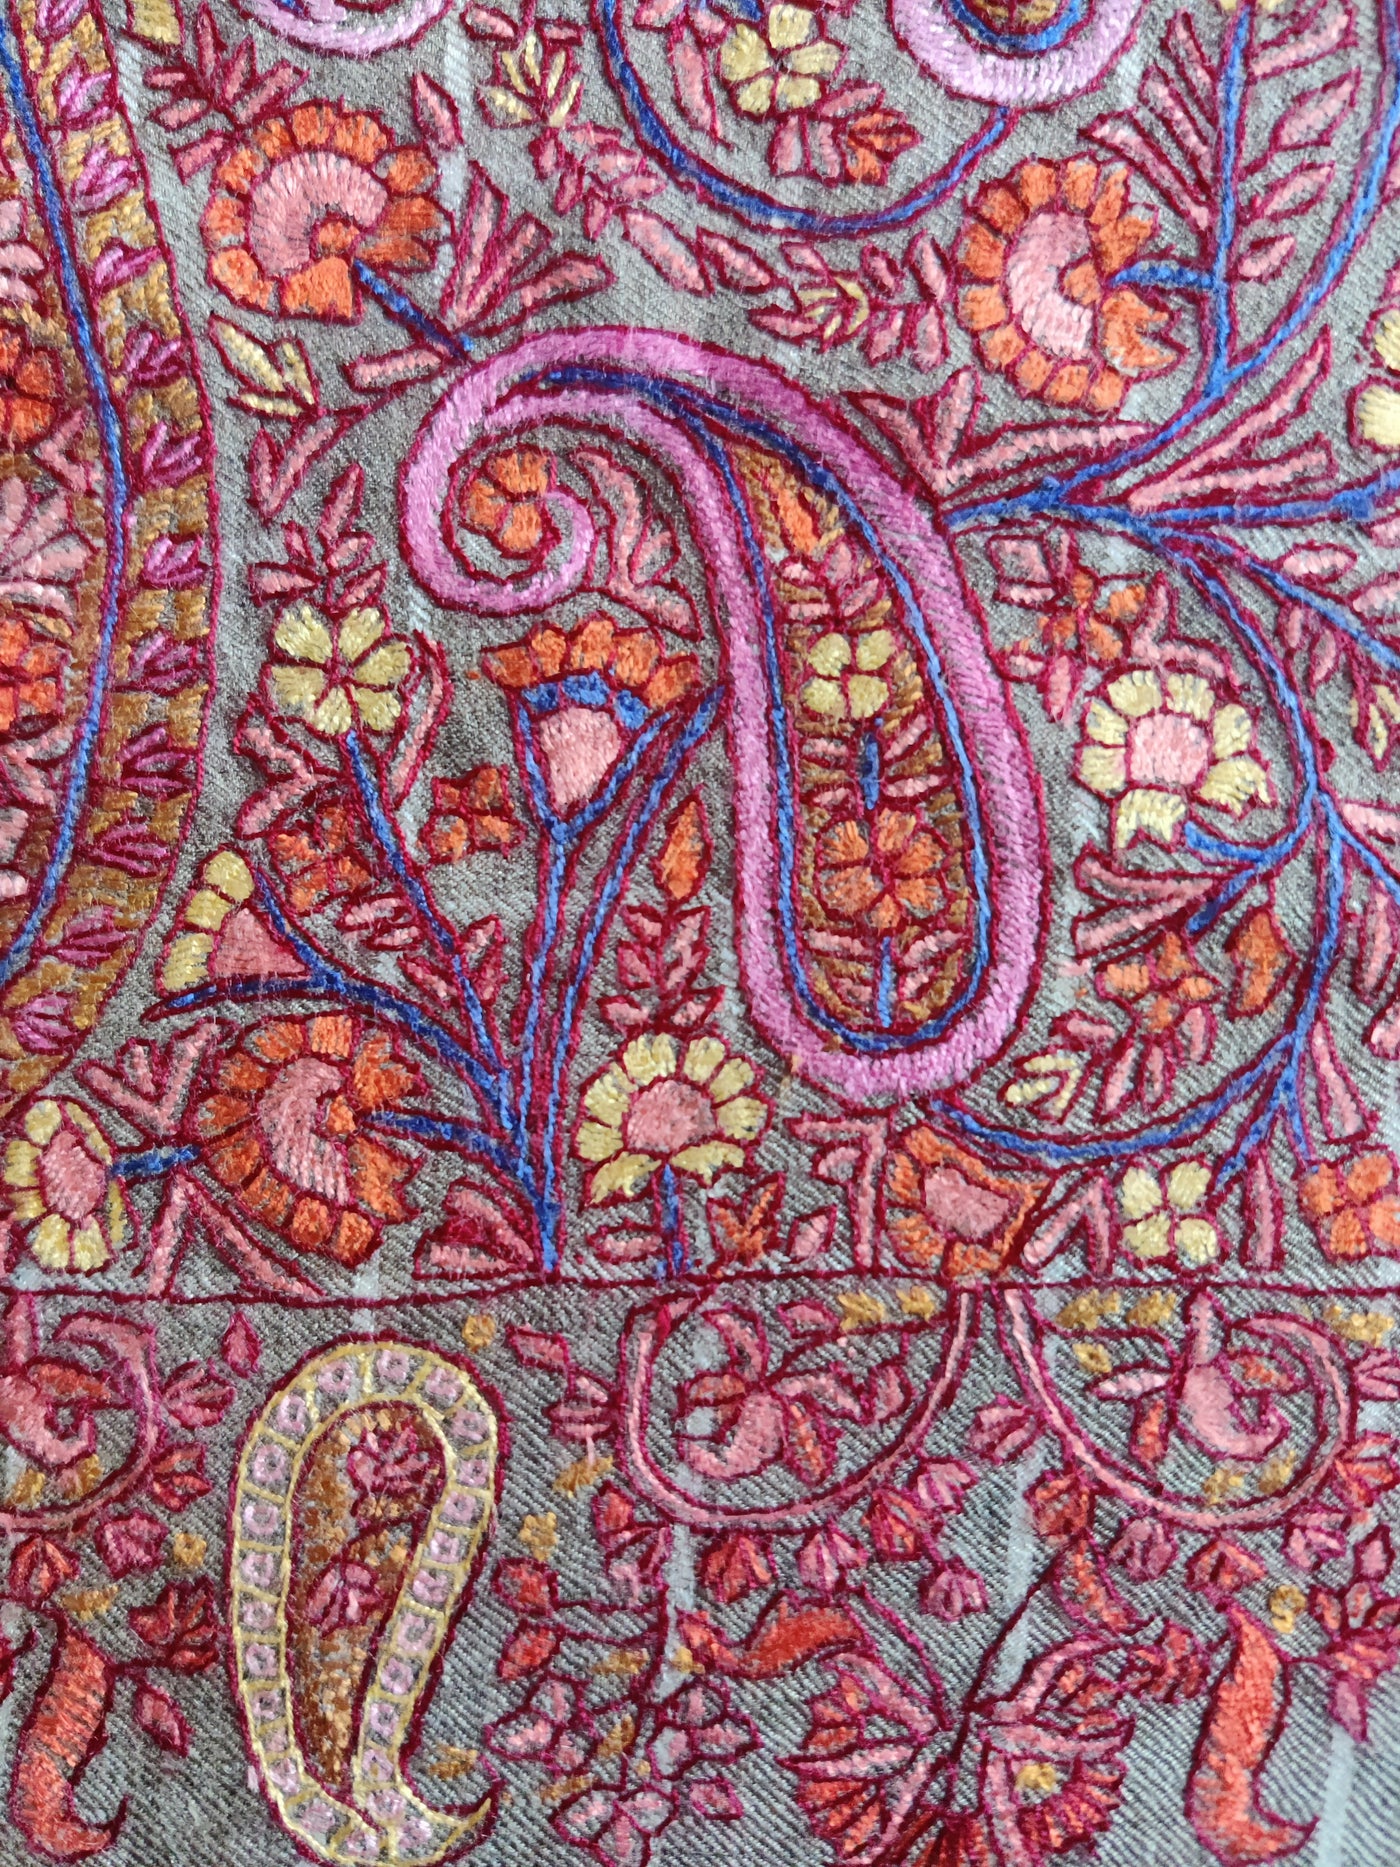 Big 275 cm (108") x 140 cm (55") Roshanara Paisley Cascade: Pure Pashmina Shawl with Hand Sozni Embroidery